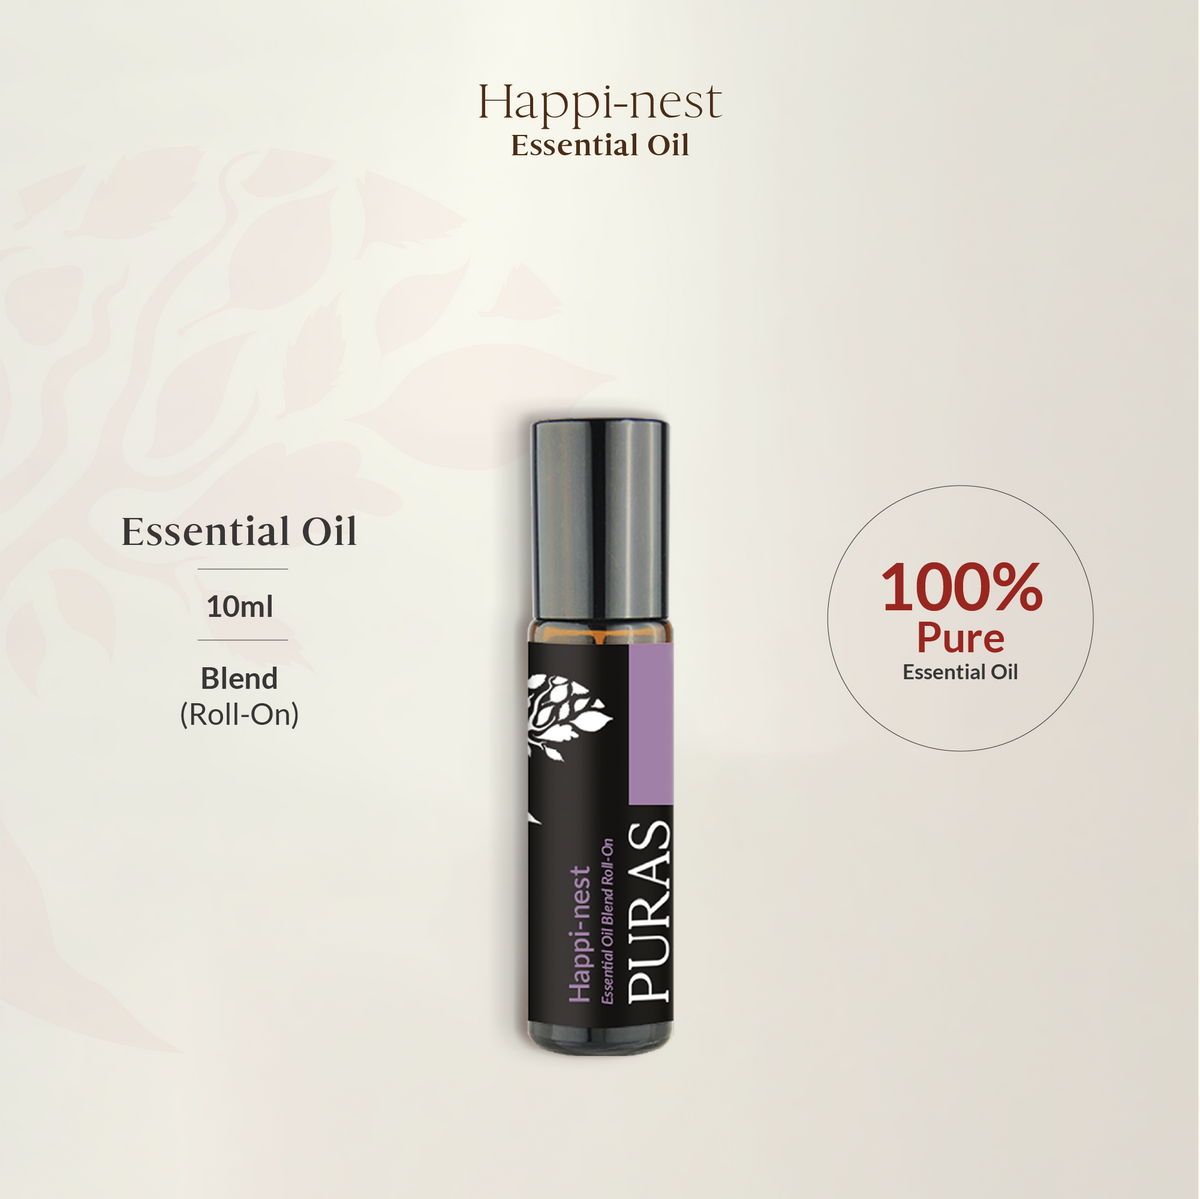 Happi-nest Essential Oil Blend (Roll-On) 10ml